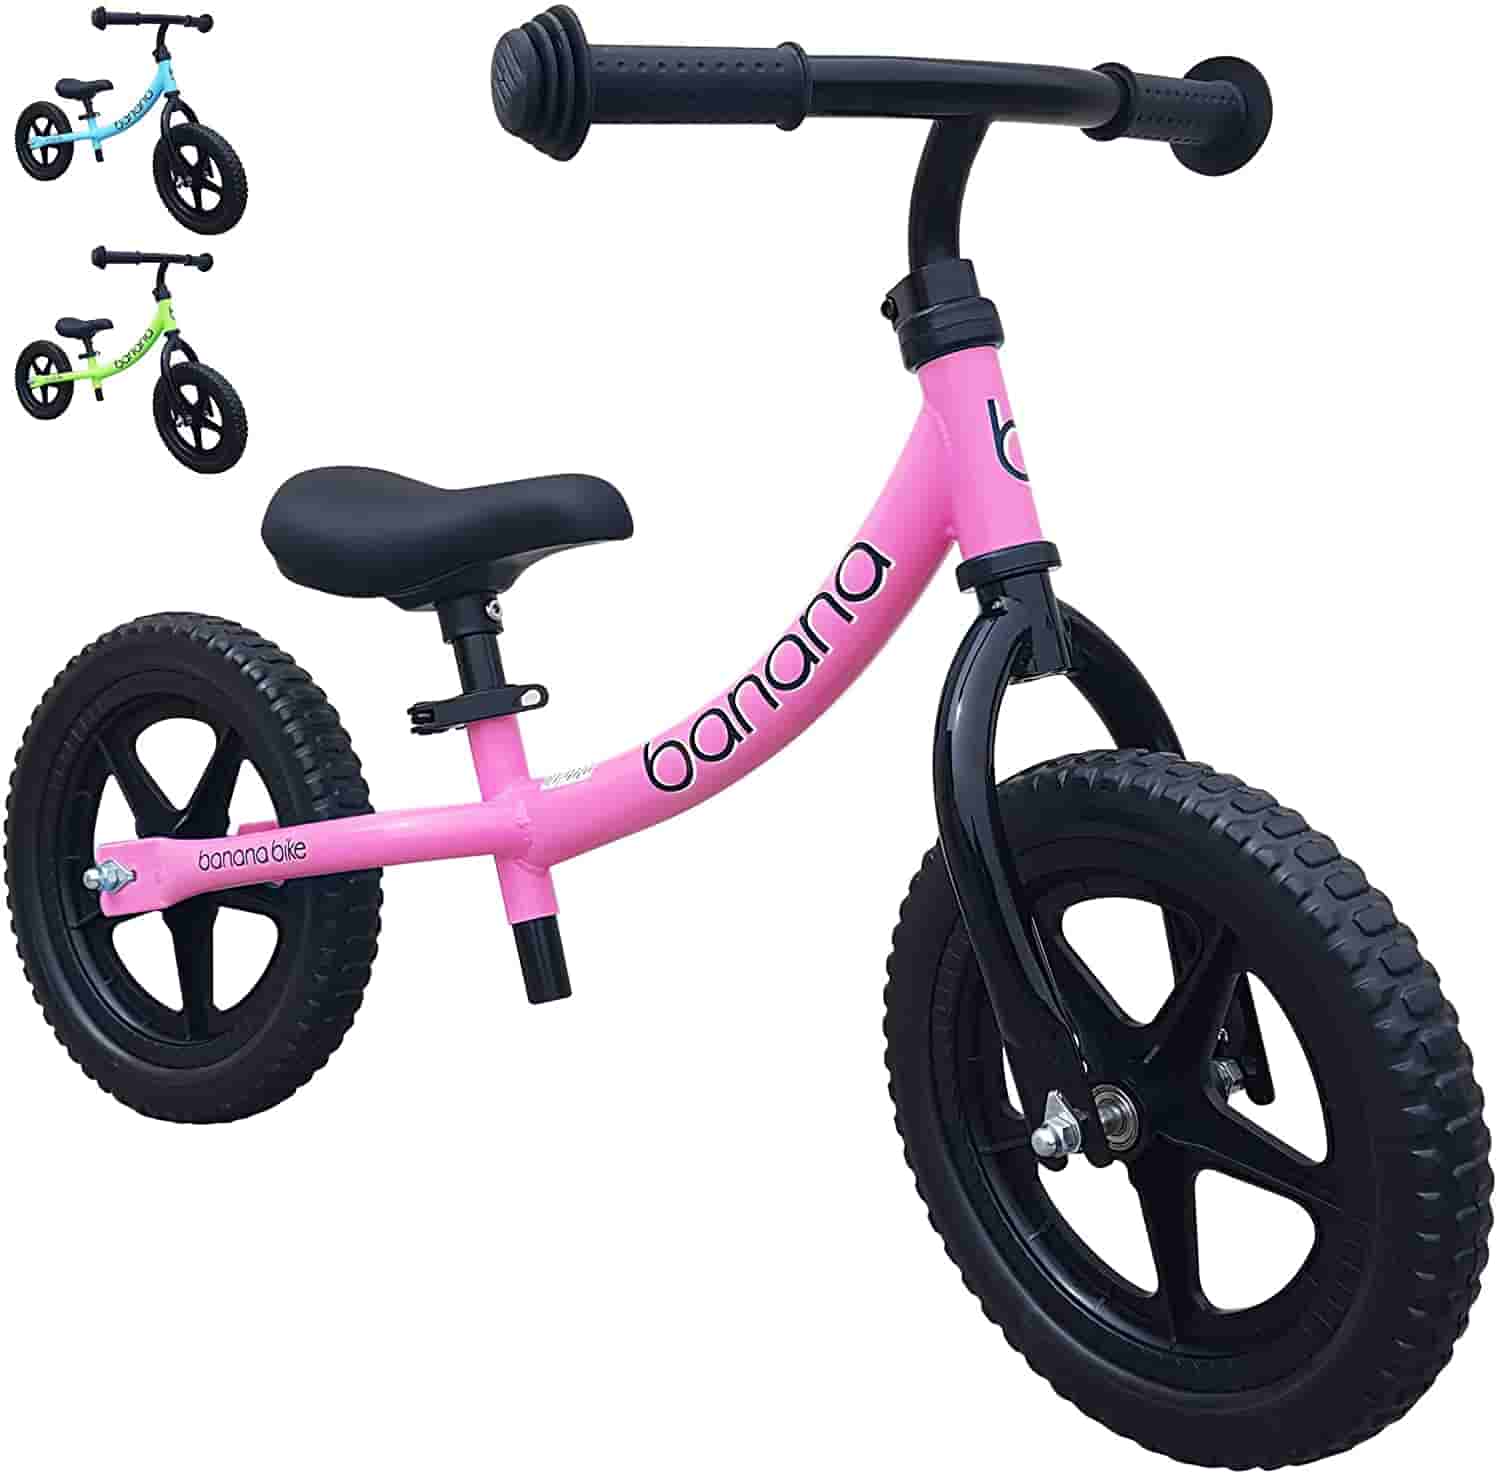 Banana LT Balance Bike - Lightweight for Toddlers